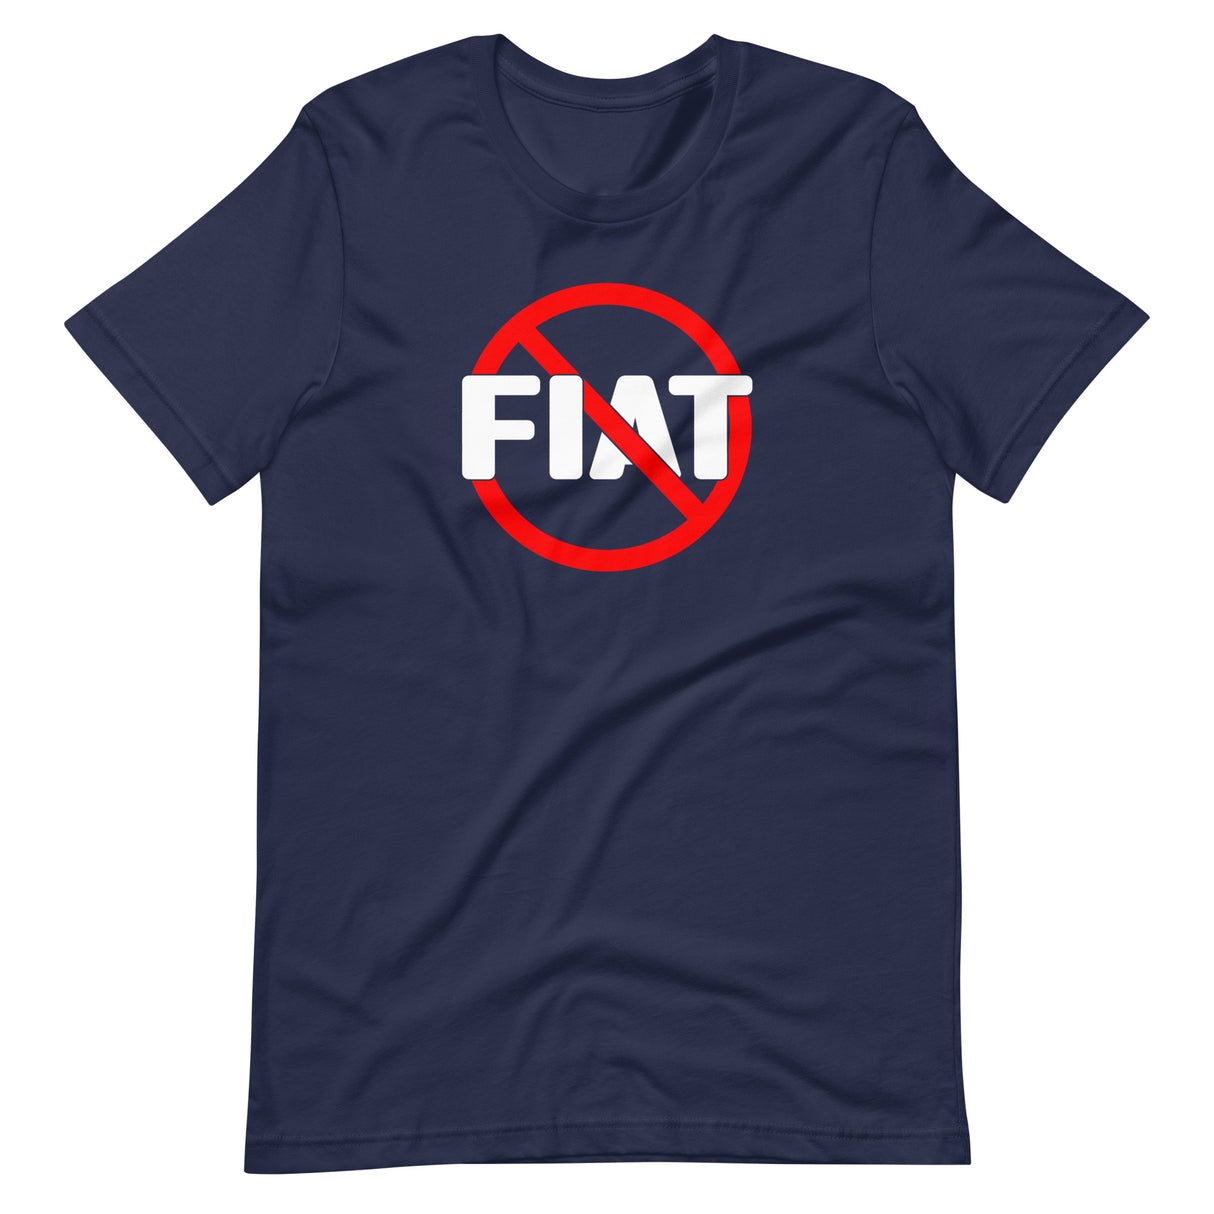 Anti-Fiat Shirt